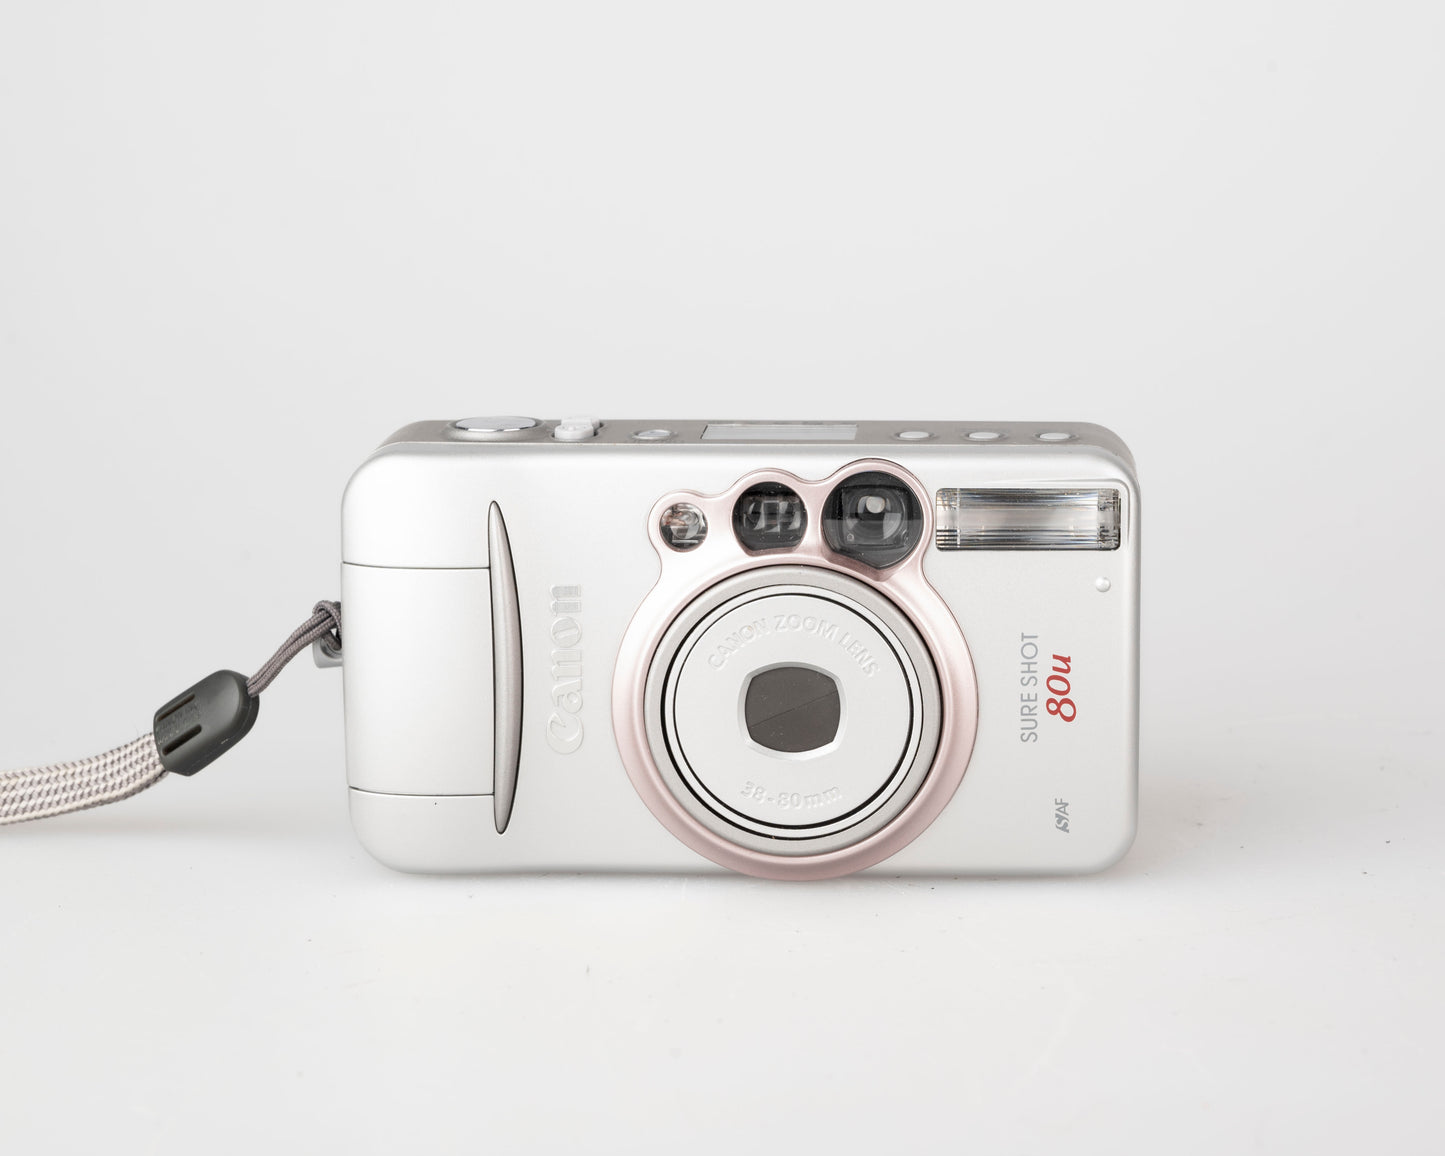 Canon Sure Shot 80u 35mm camera w/ case (serial 8021818)